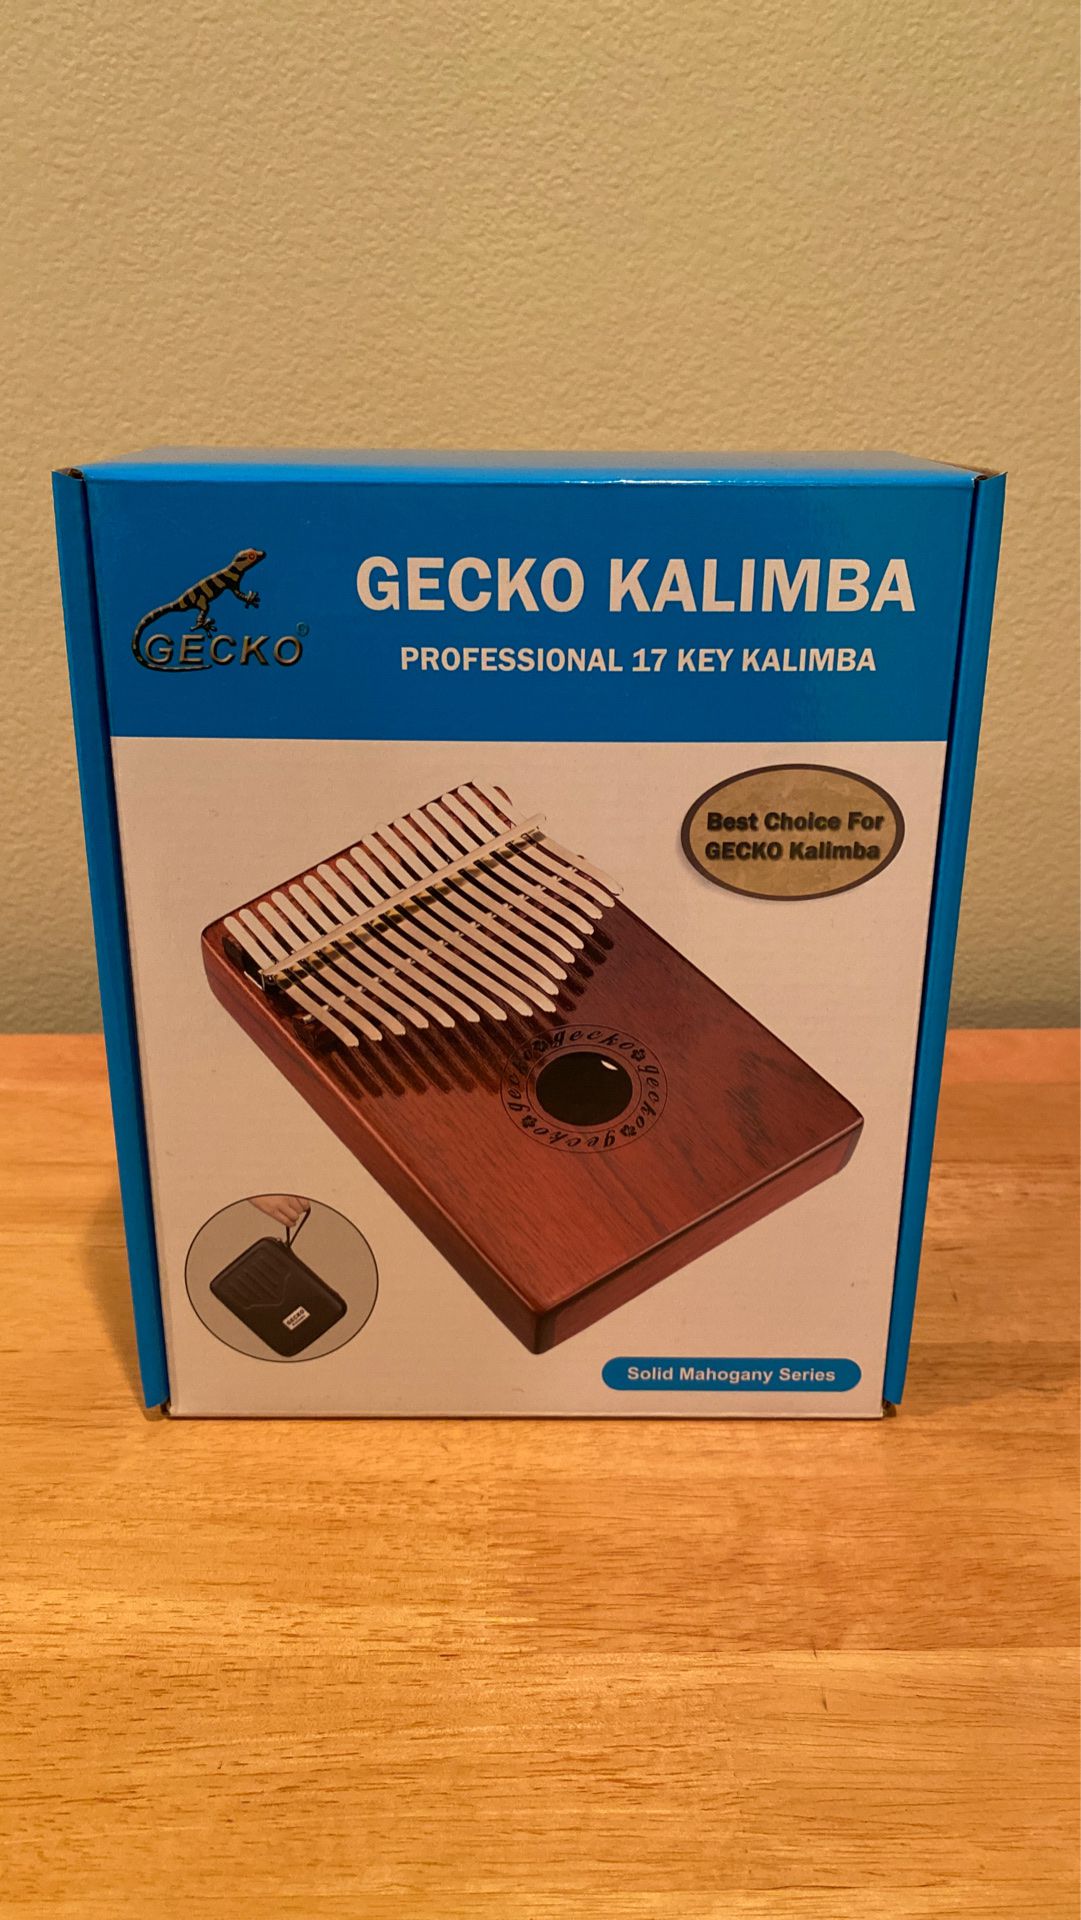 Gecko Kalimba finger piano